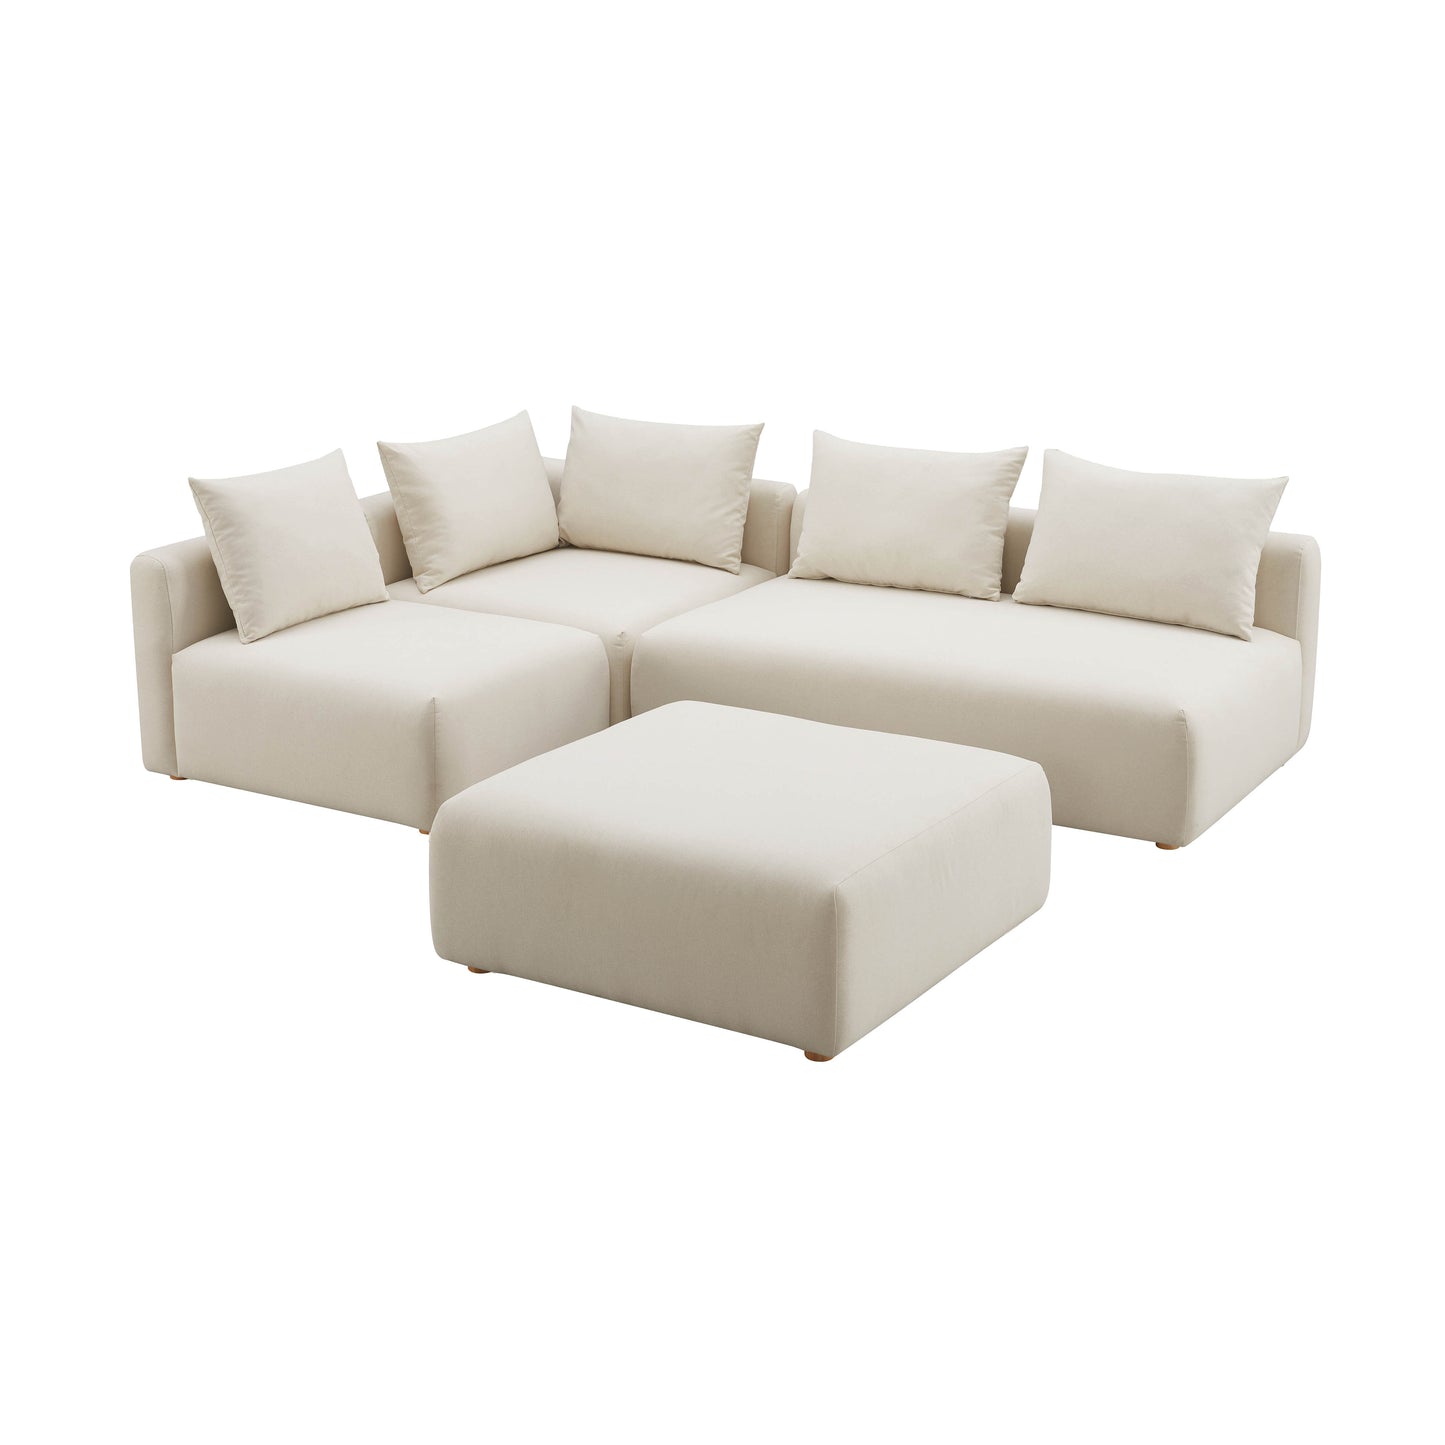 Tov Furniture Hangover Cream Linen 4-Piece Modular Chaise Sectional